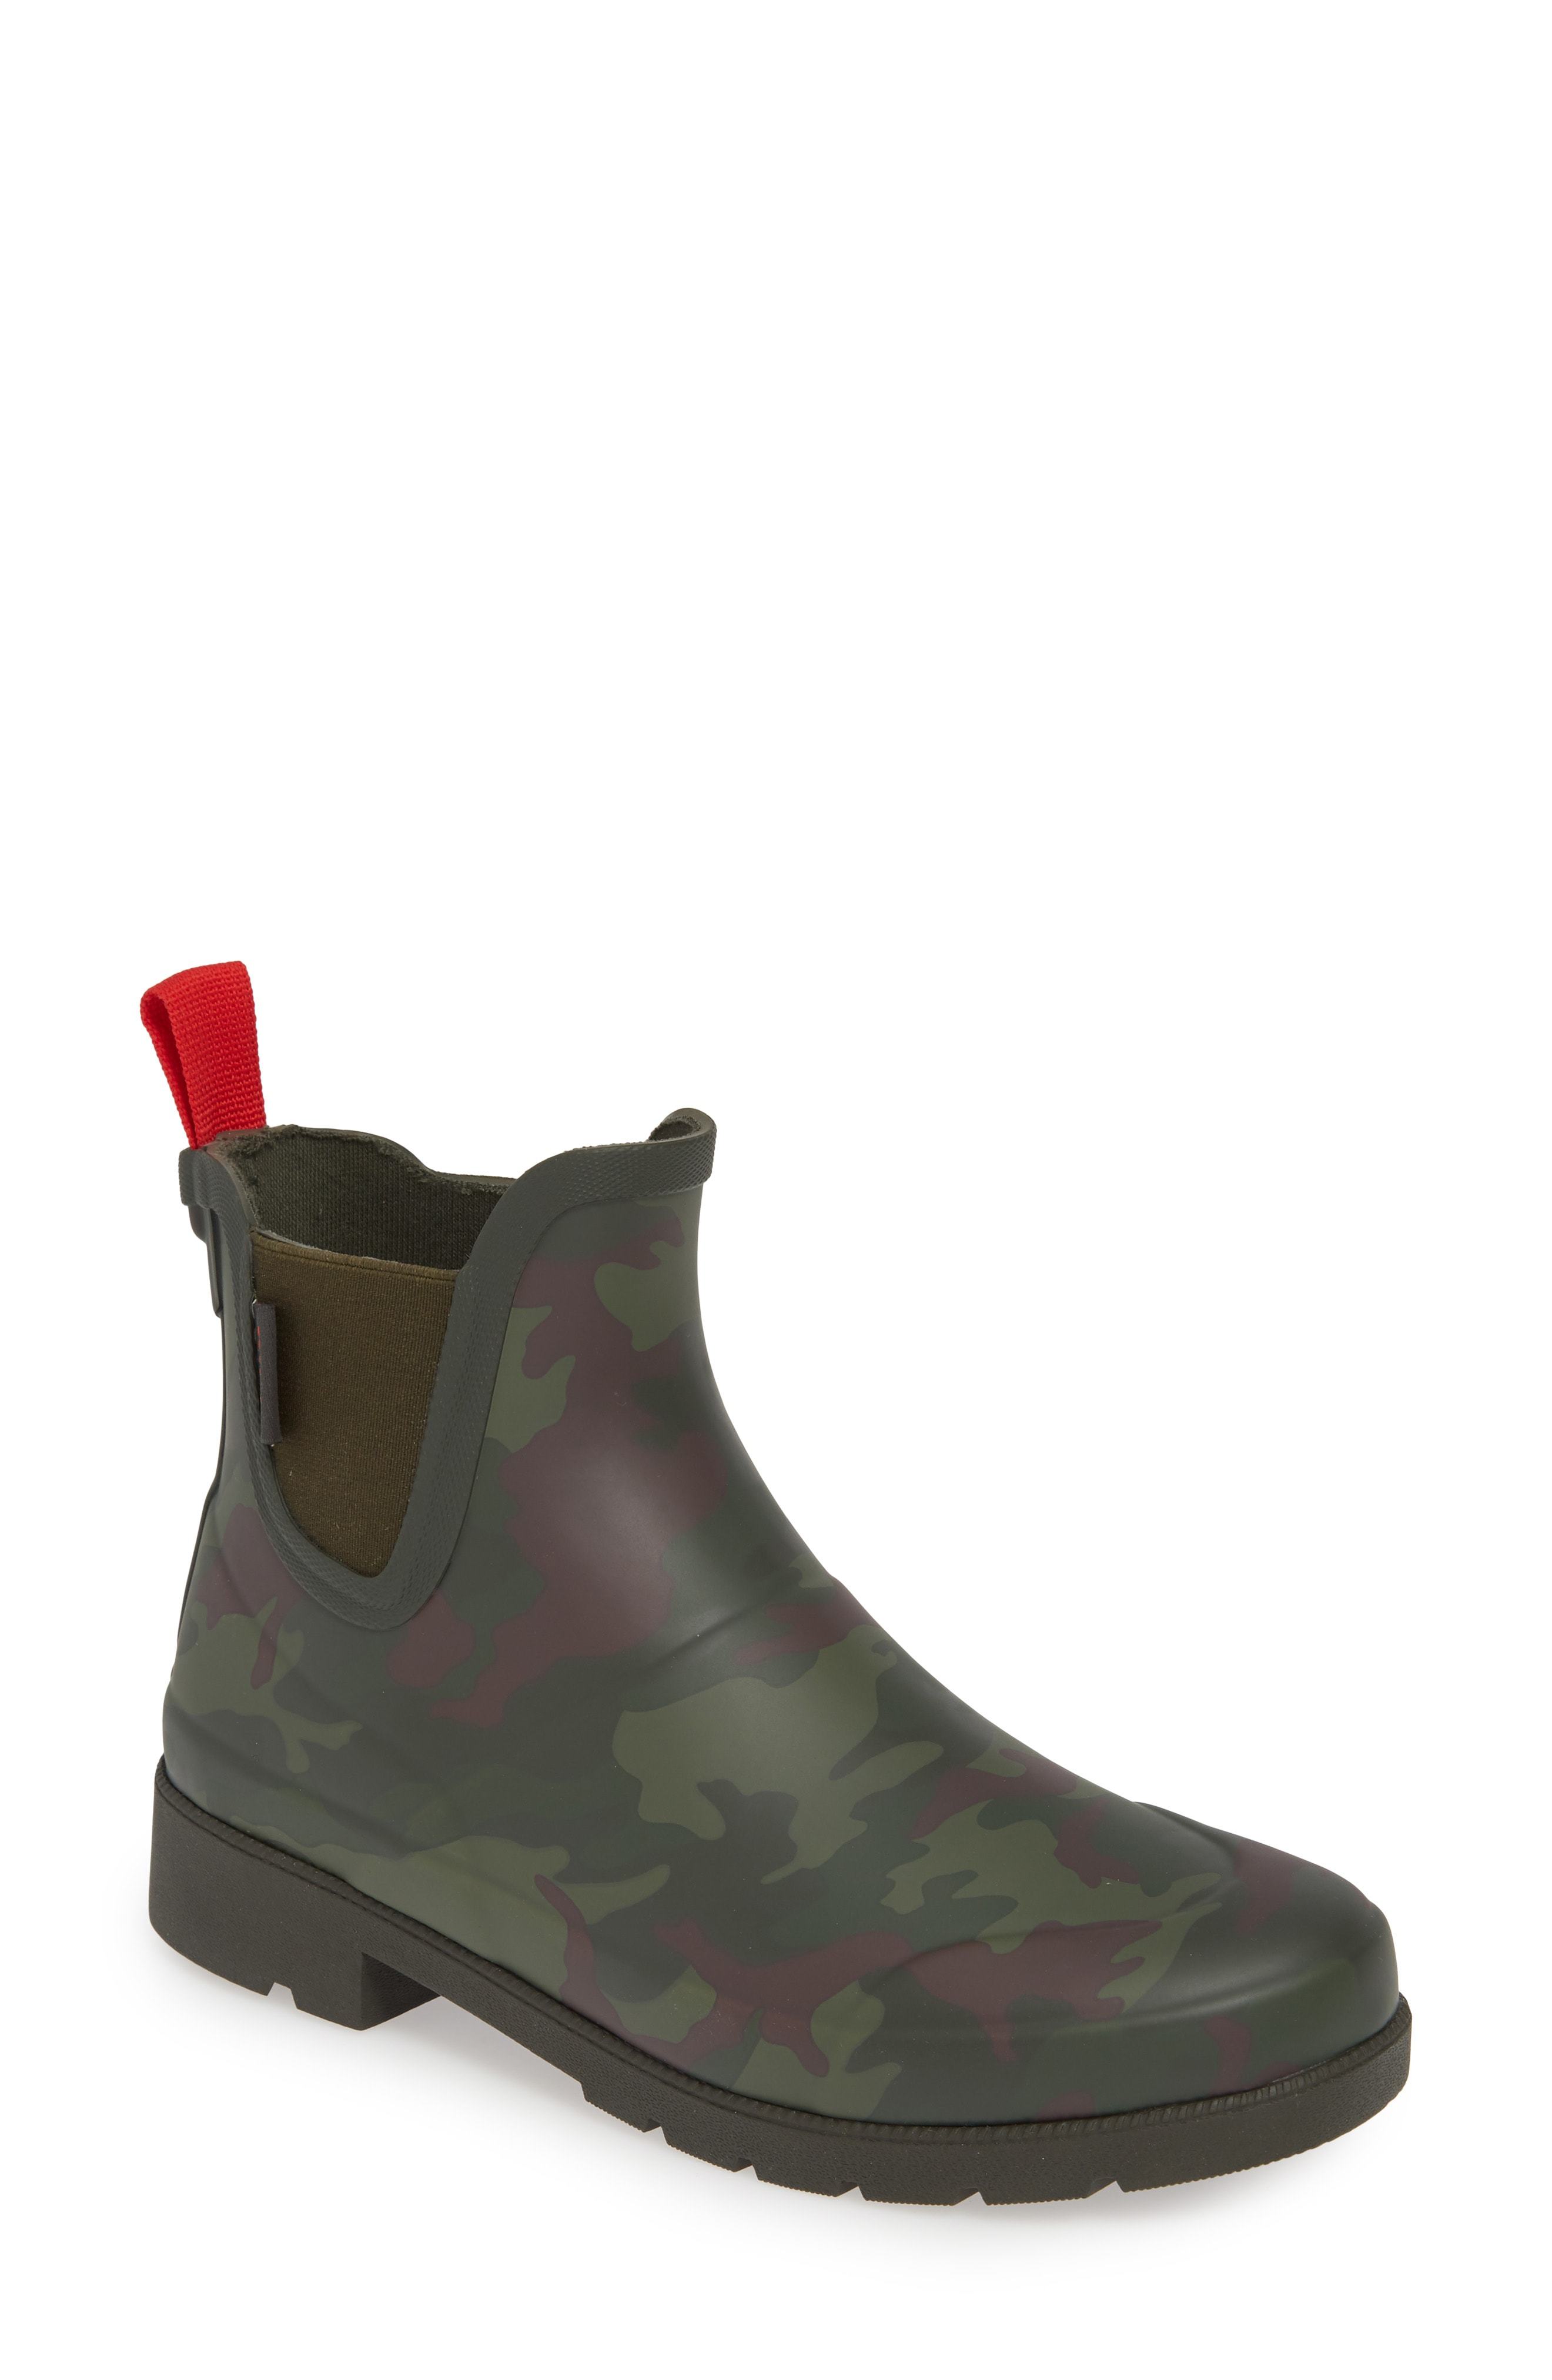 tretorn lina rain boots